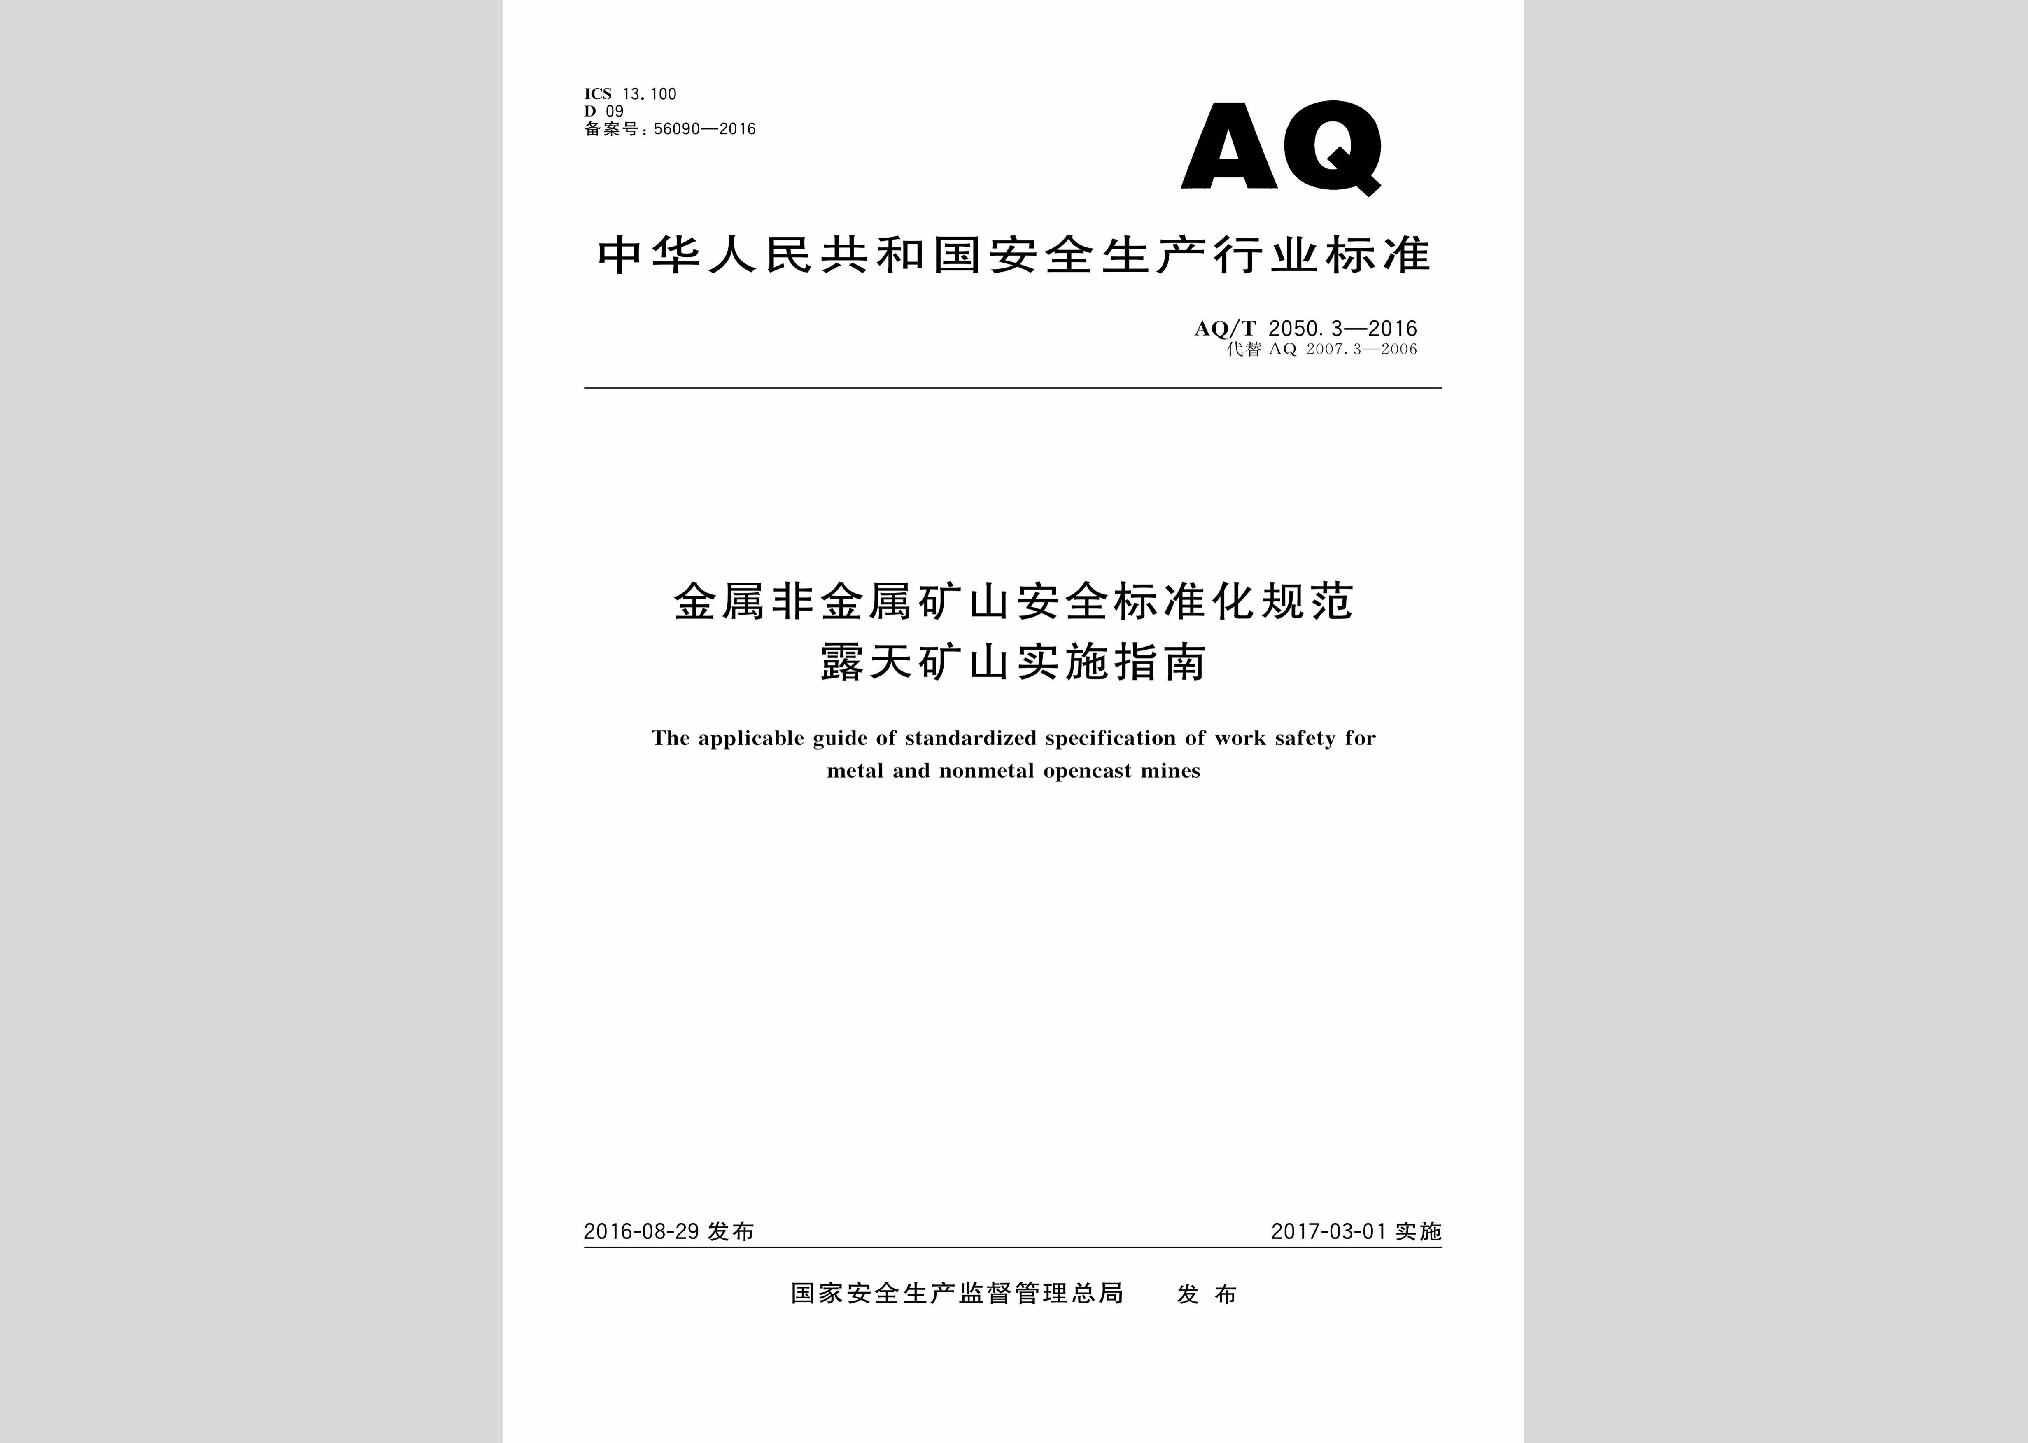 AQ/T2050.3-2016：金属非金属矿山安全标准化规范露天矿山实施指南